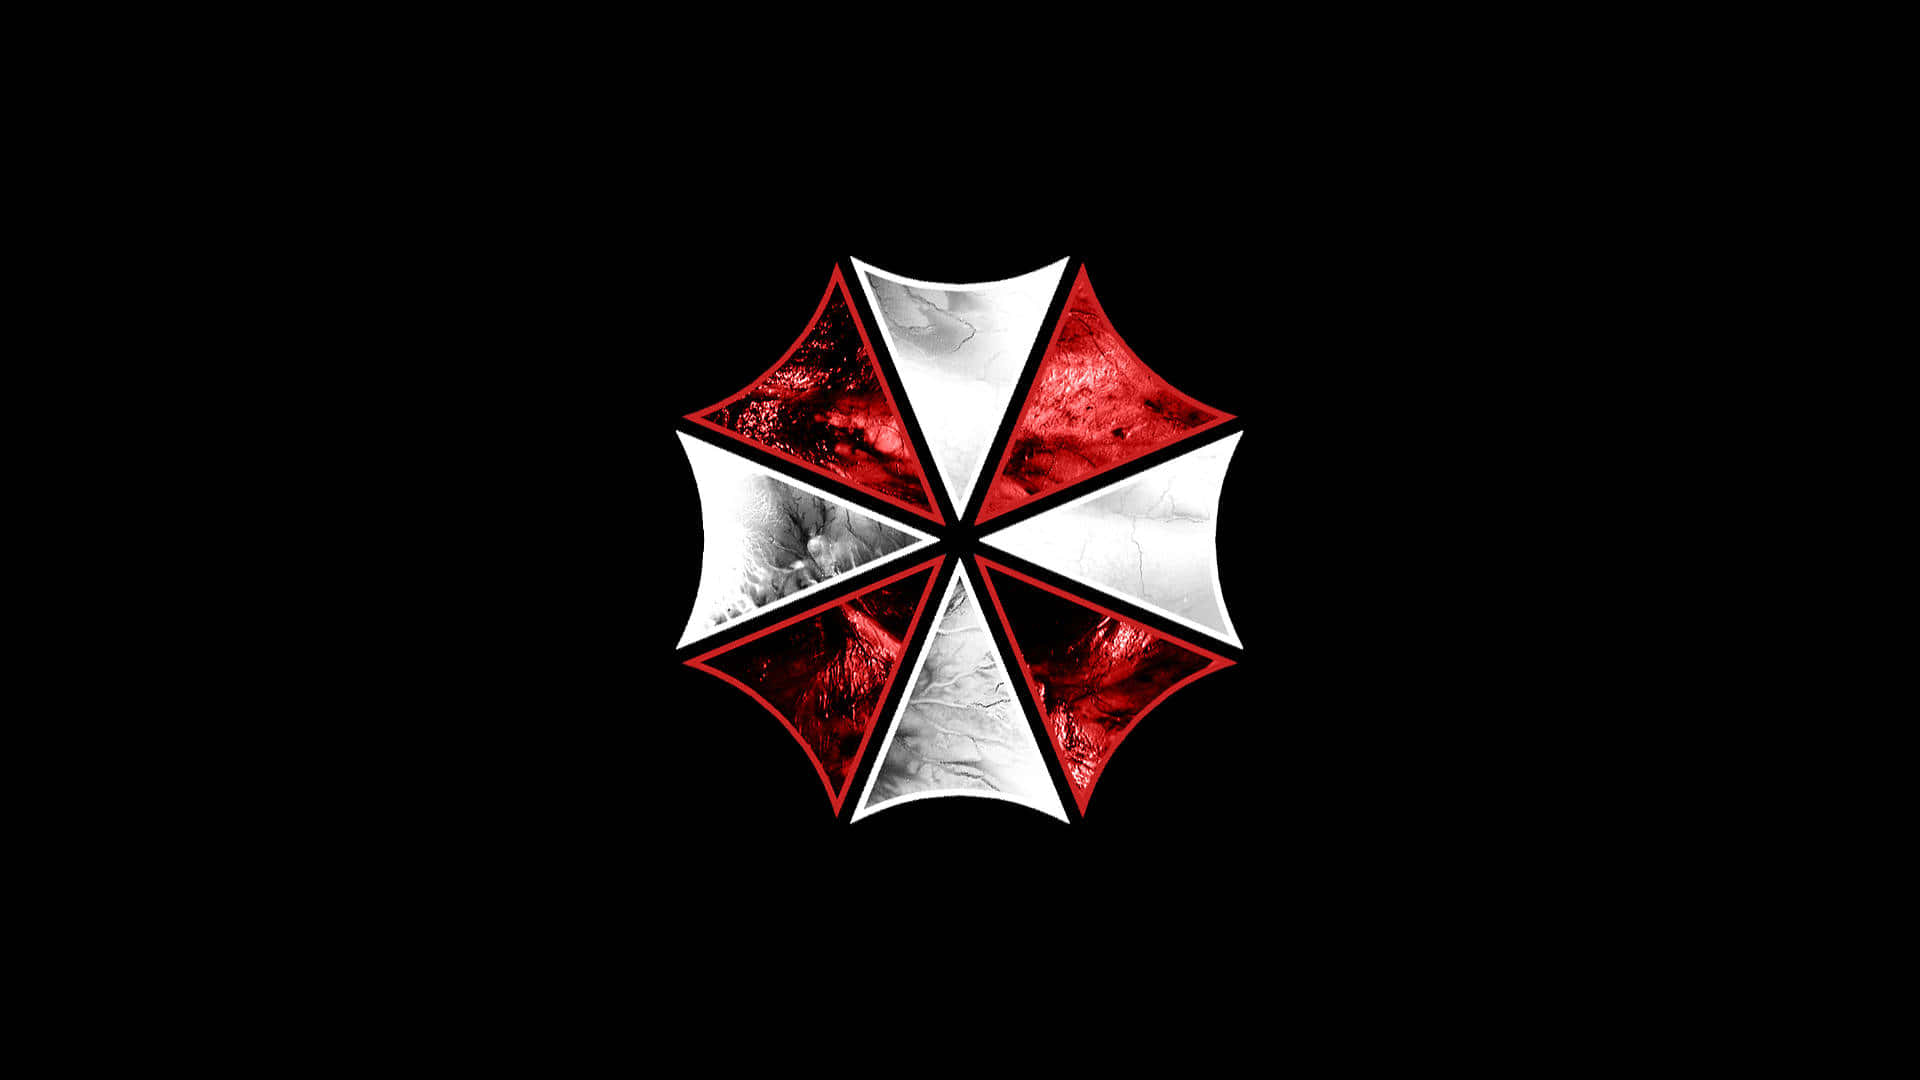 Abstract Redand White Umbrella Design